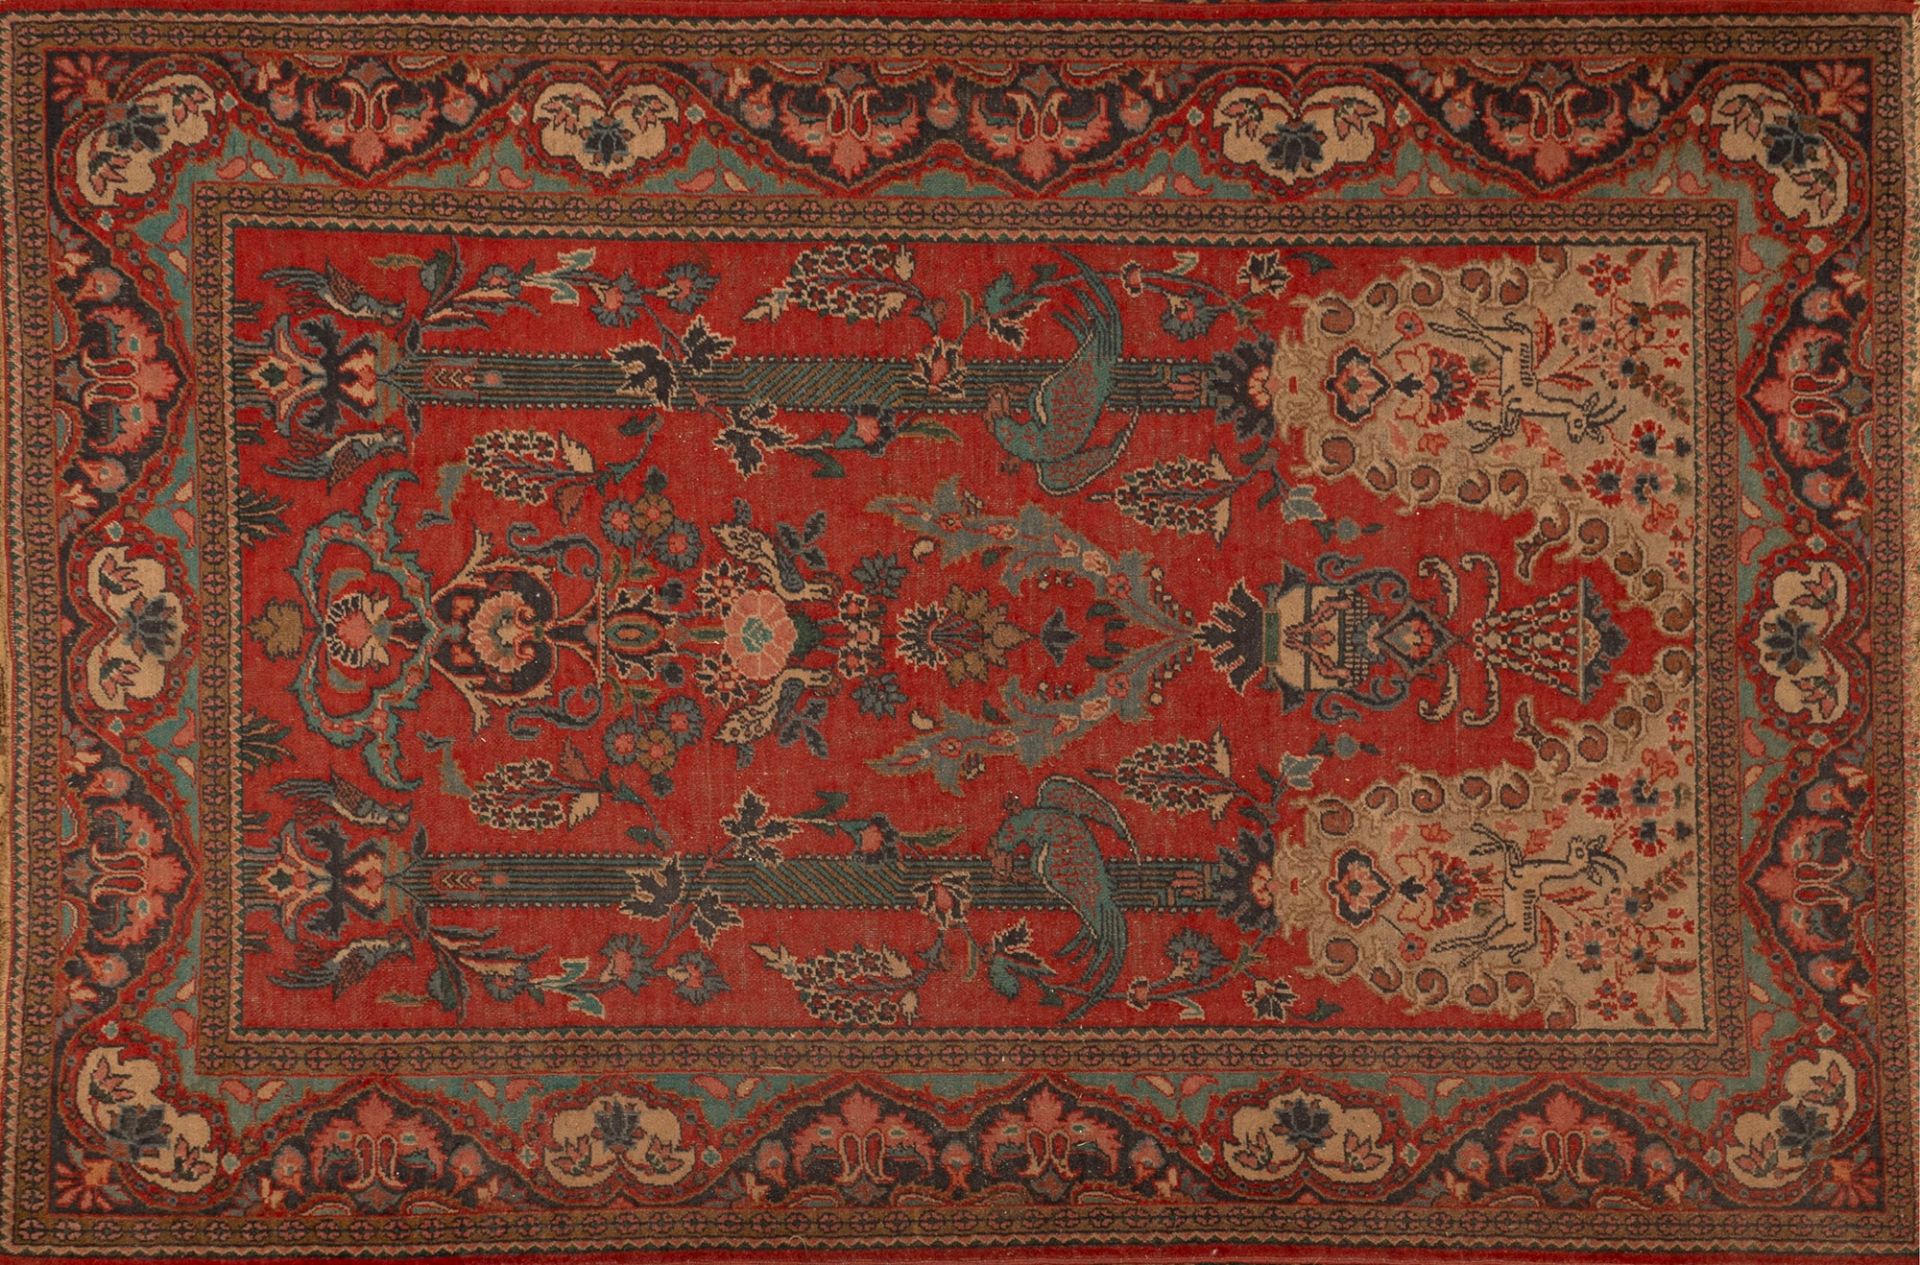 Isfahan Persian prayer rug, 19th-20th centuries